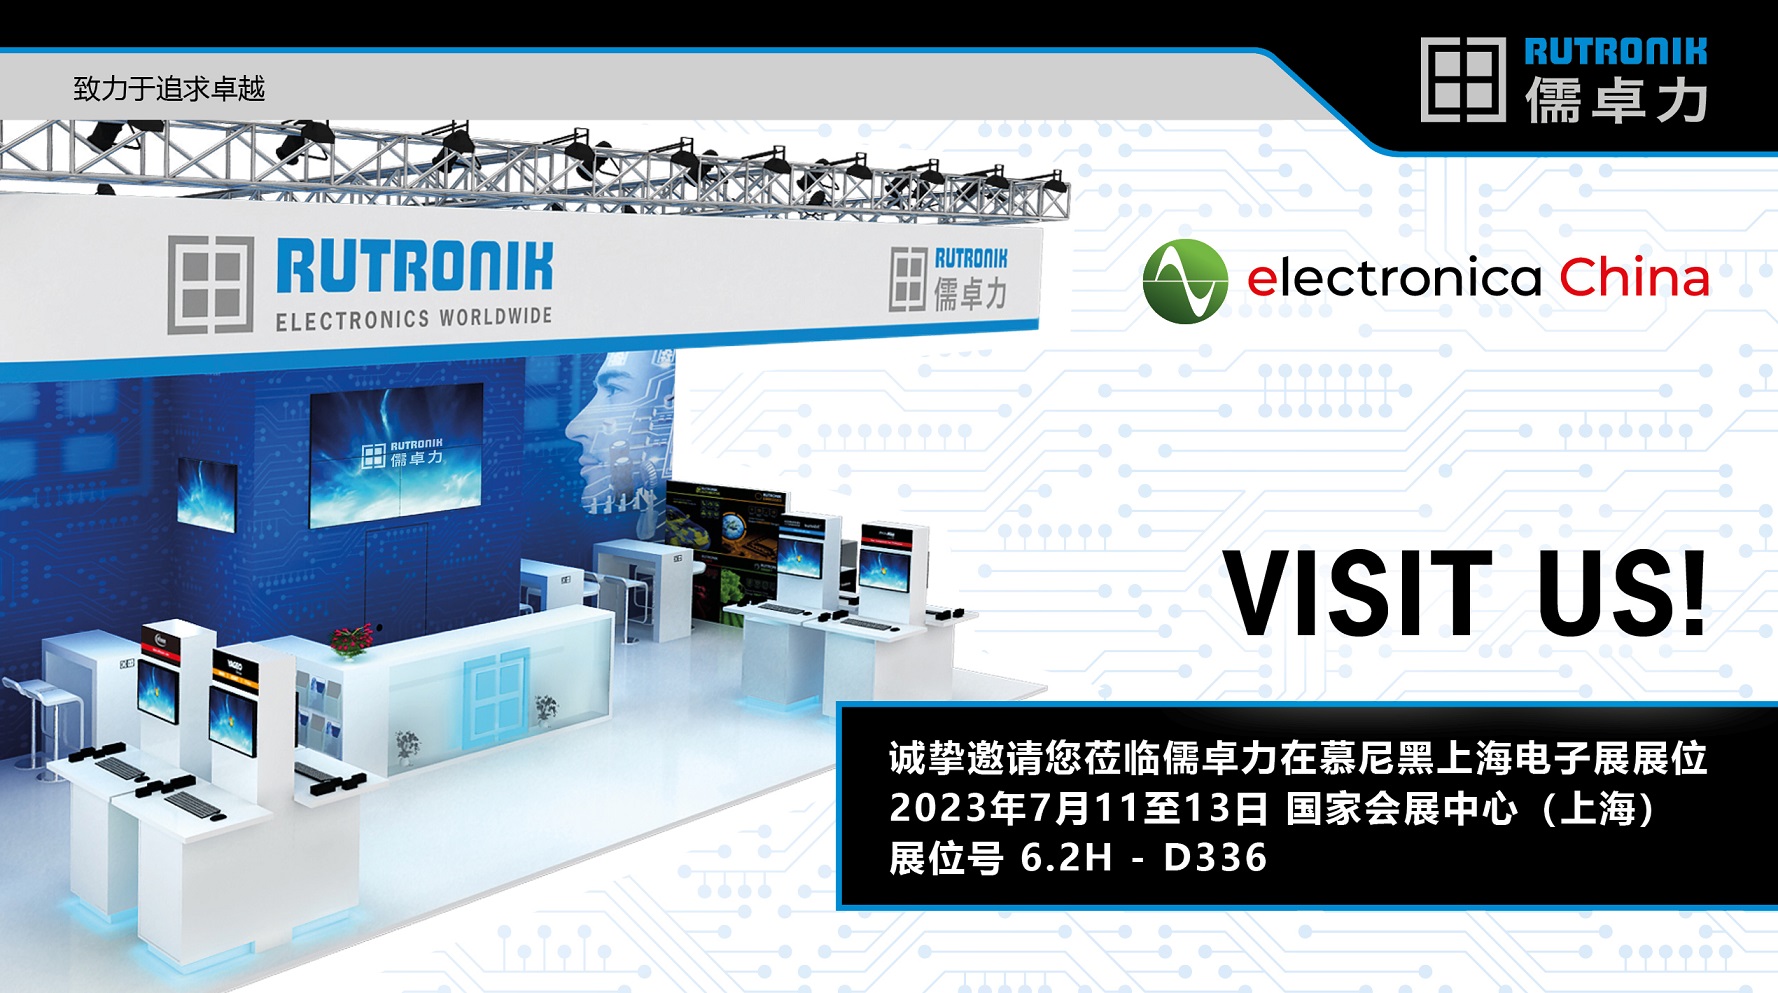 RUT159. electronica China 2023 (PR).jpg